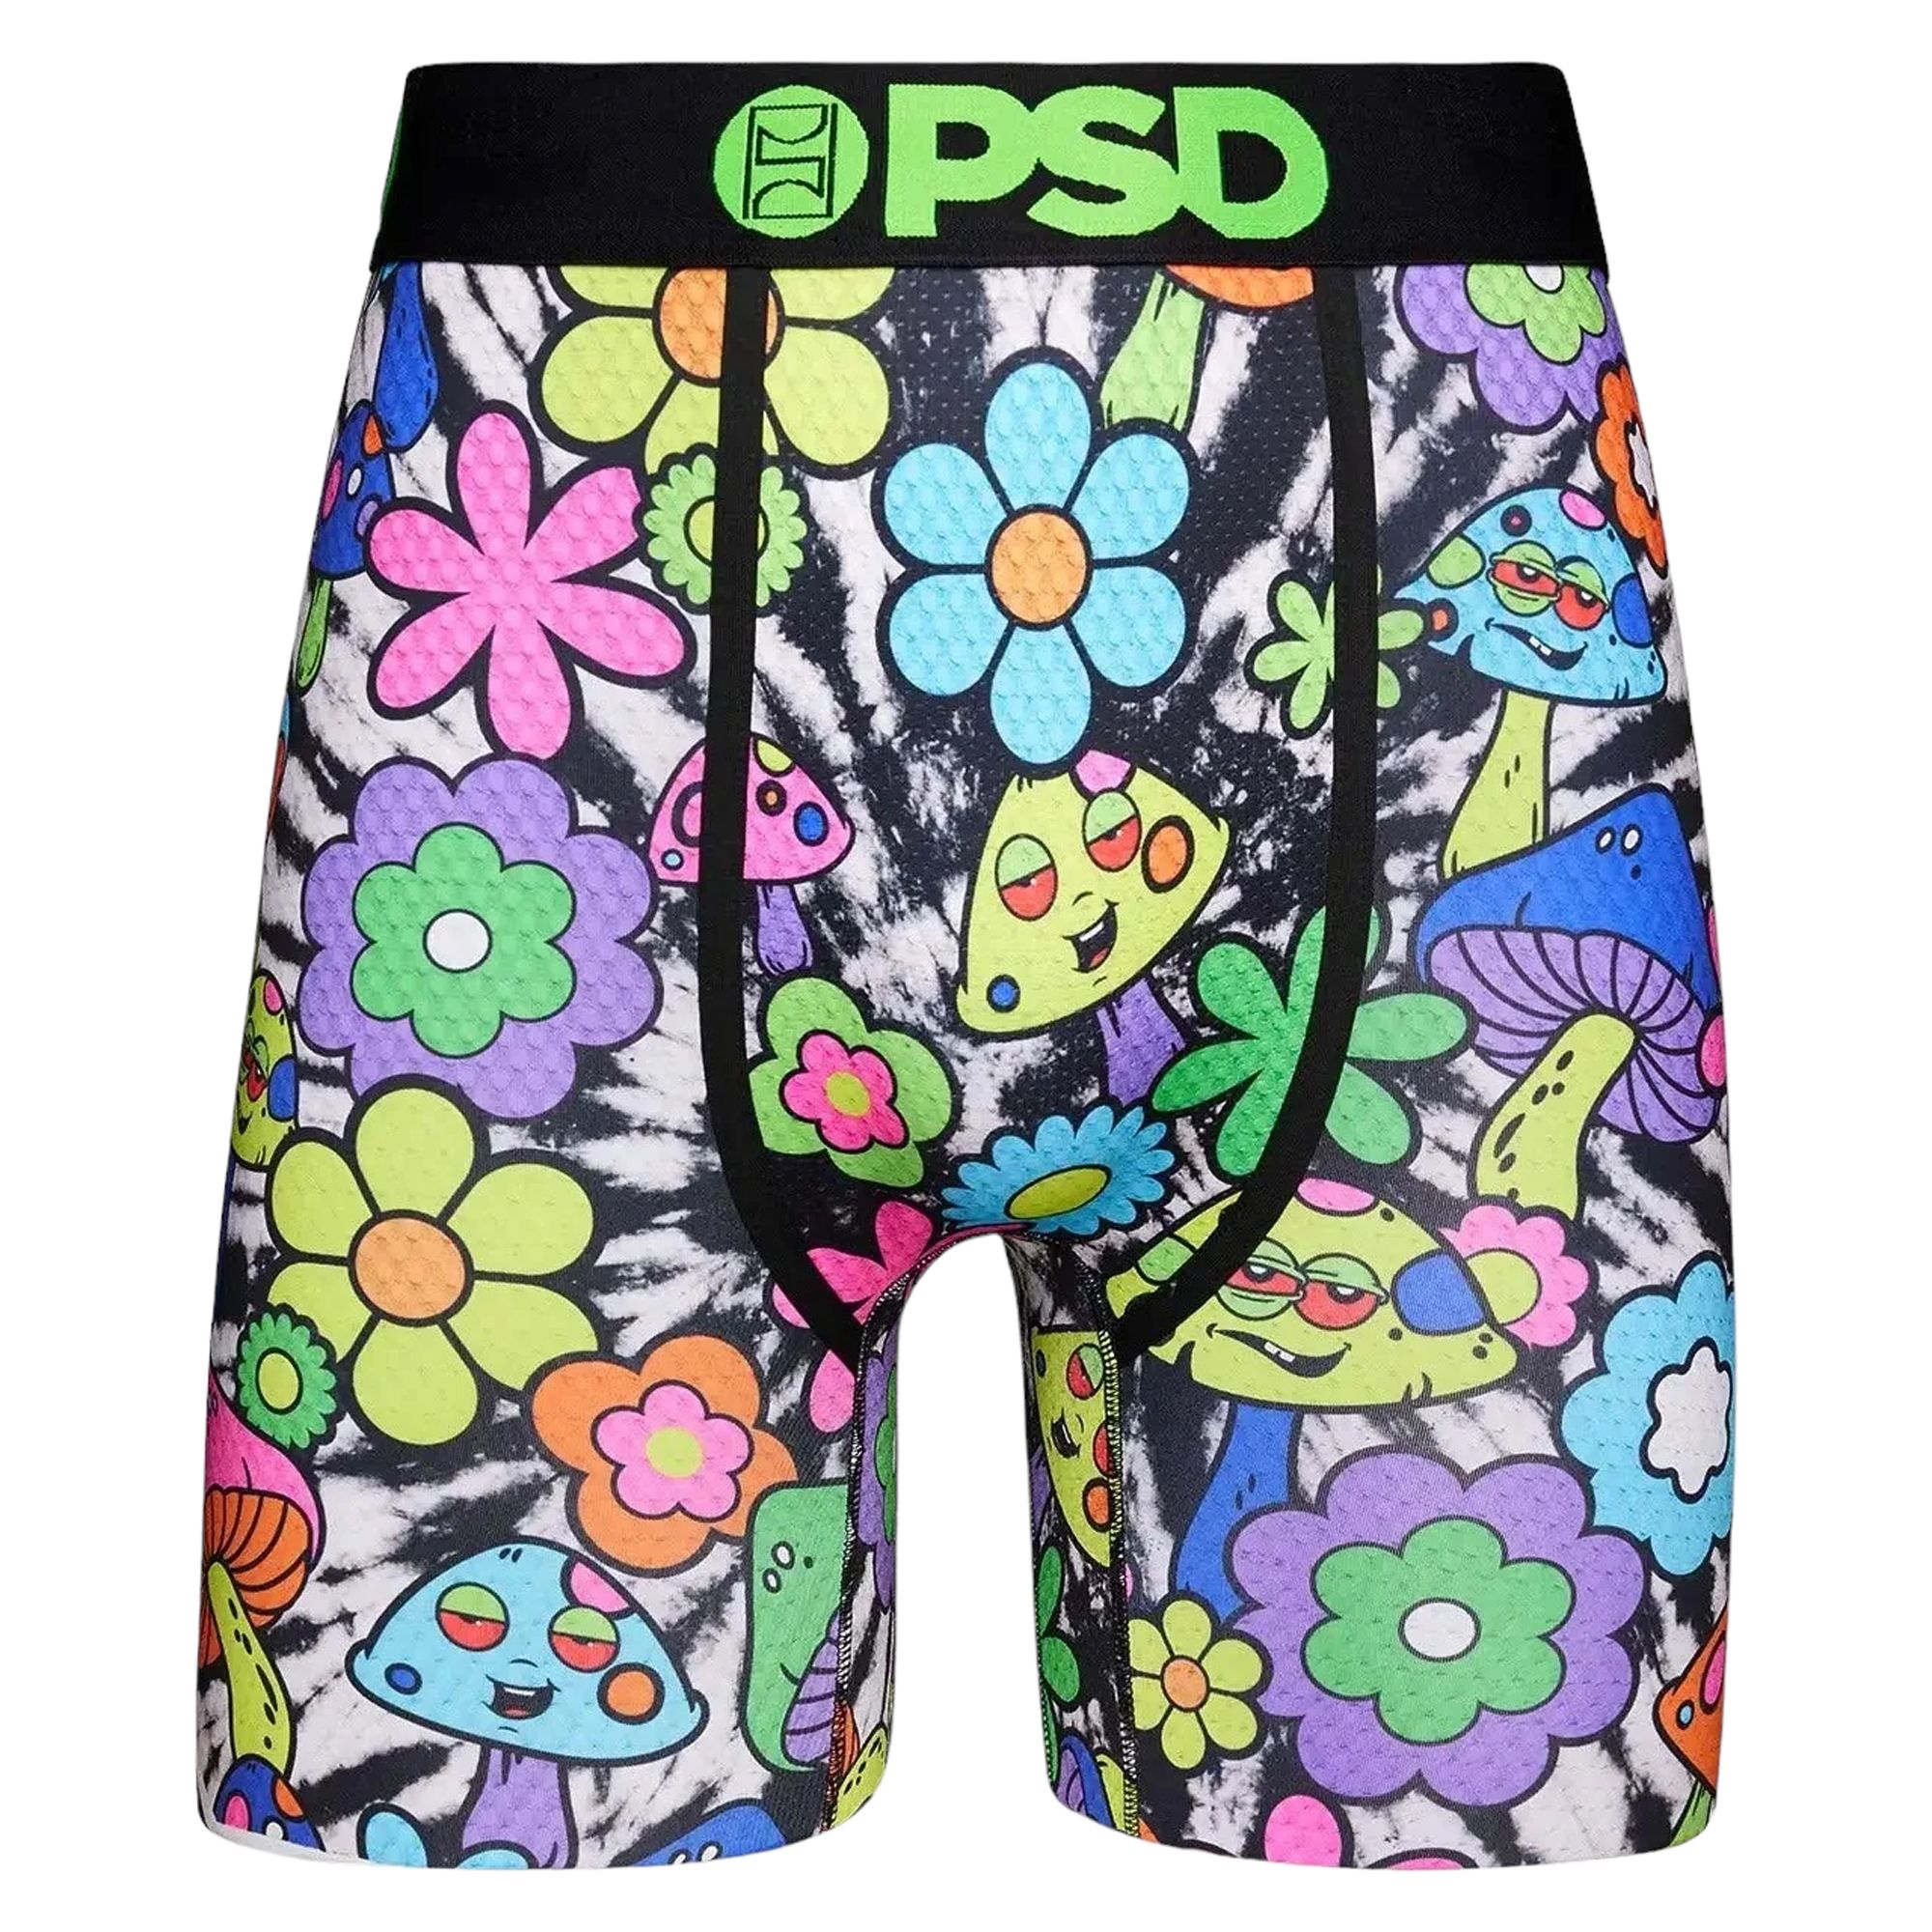 MICRO MESH - SHROOM DYE Boxer Brief - PSD Underwear